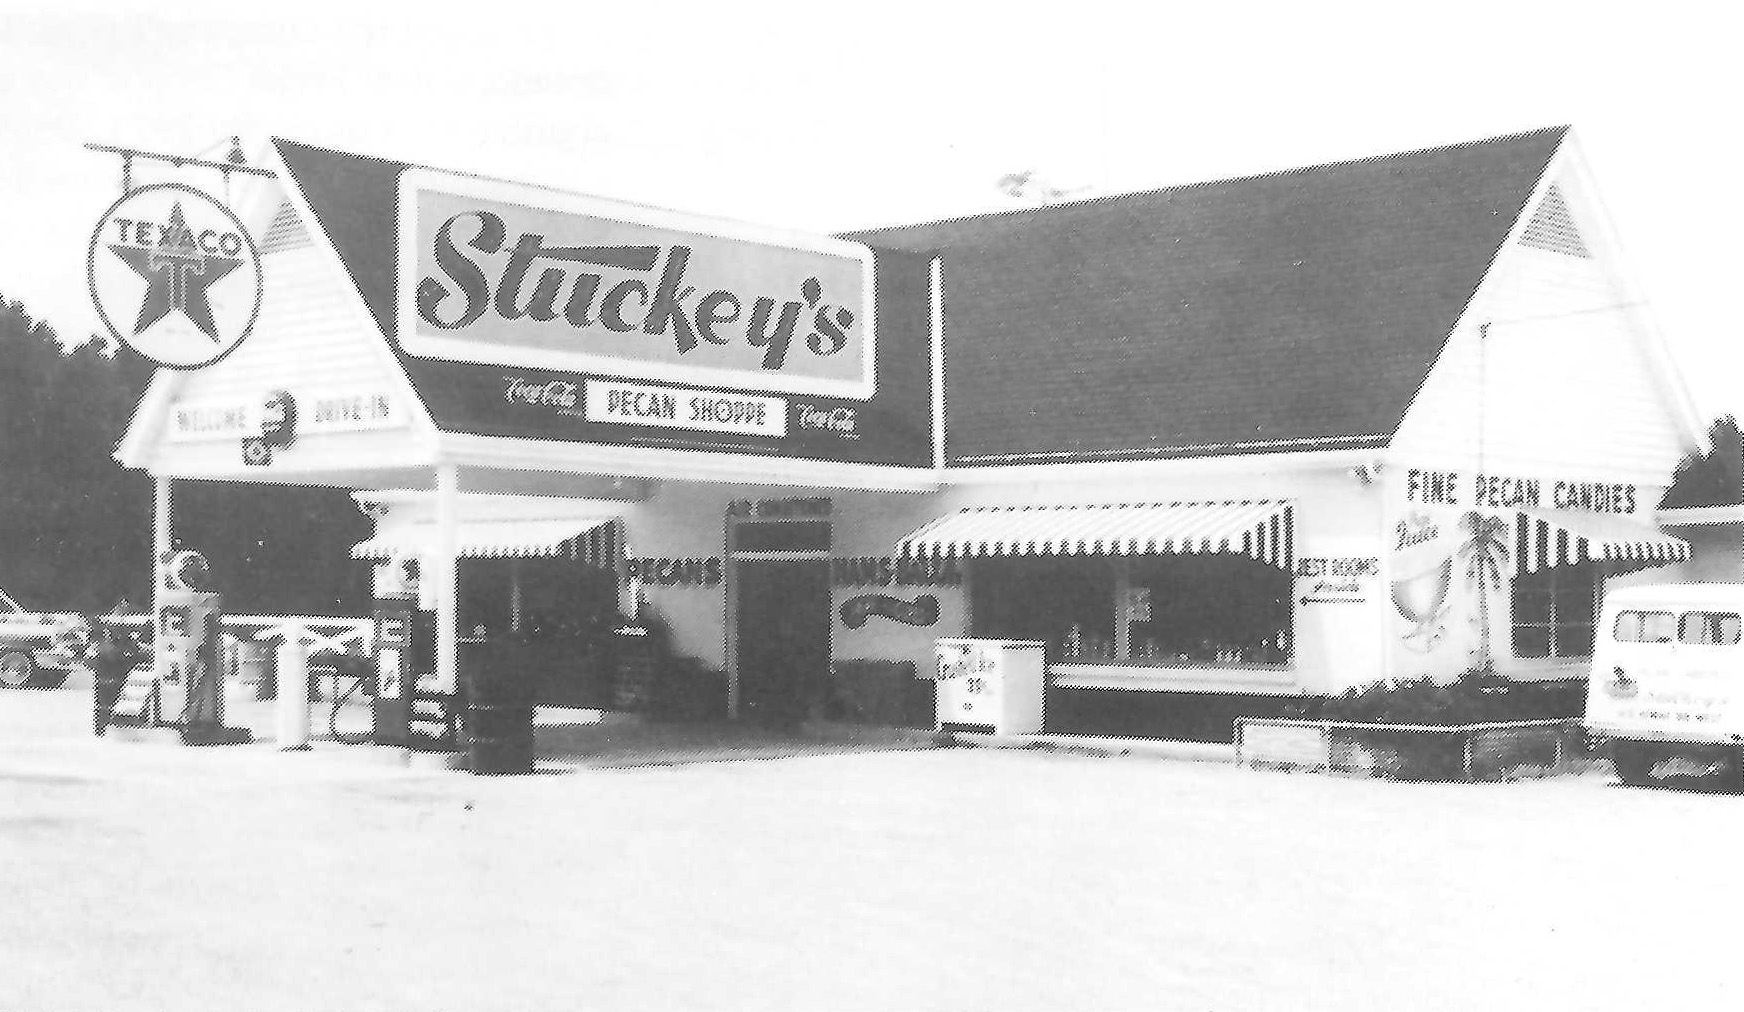 An early Stuckey's in Panama City, Florida